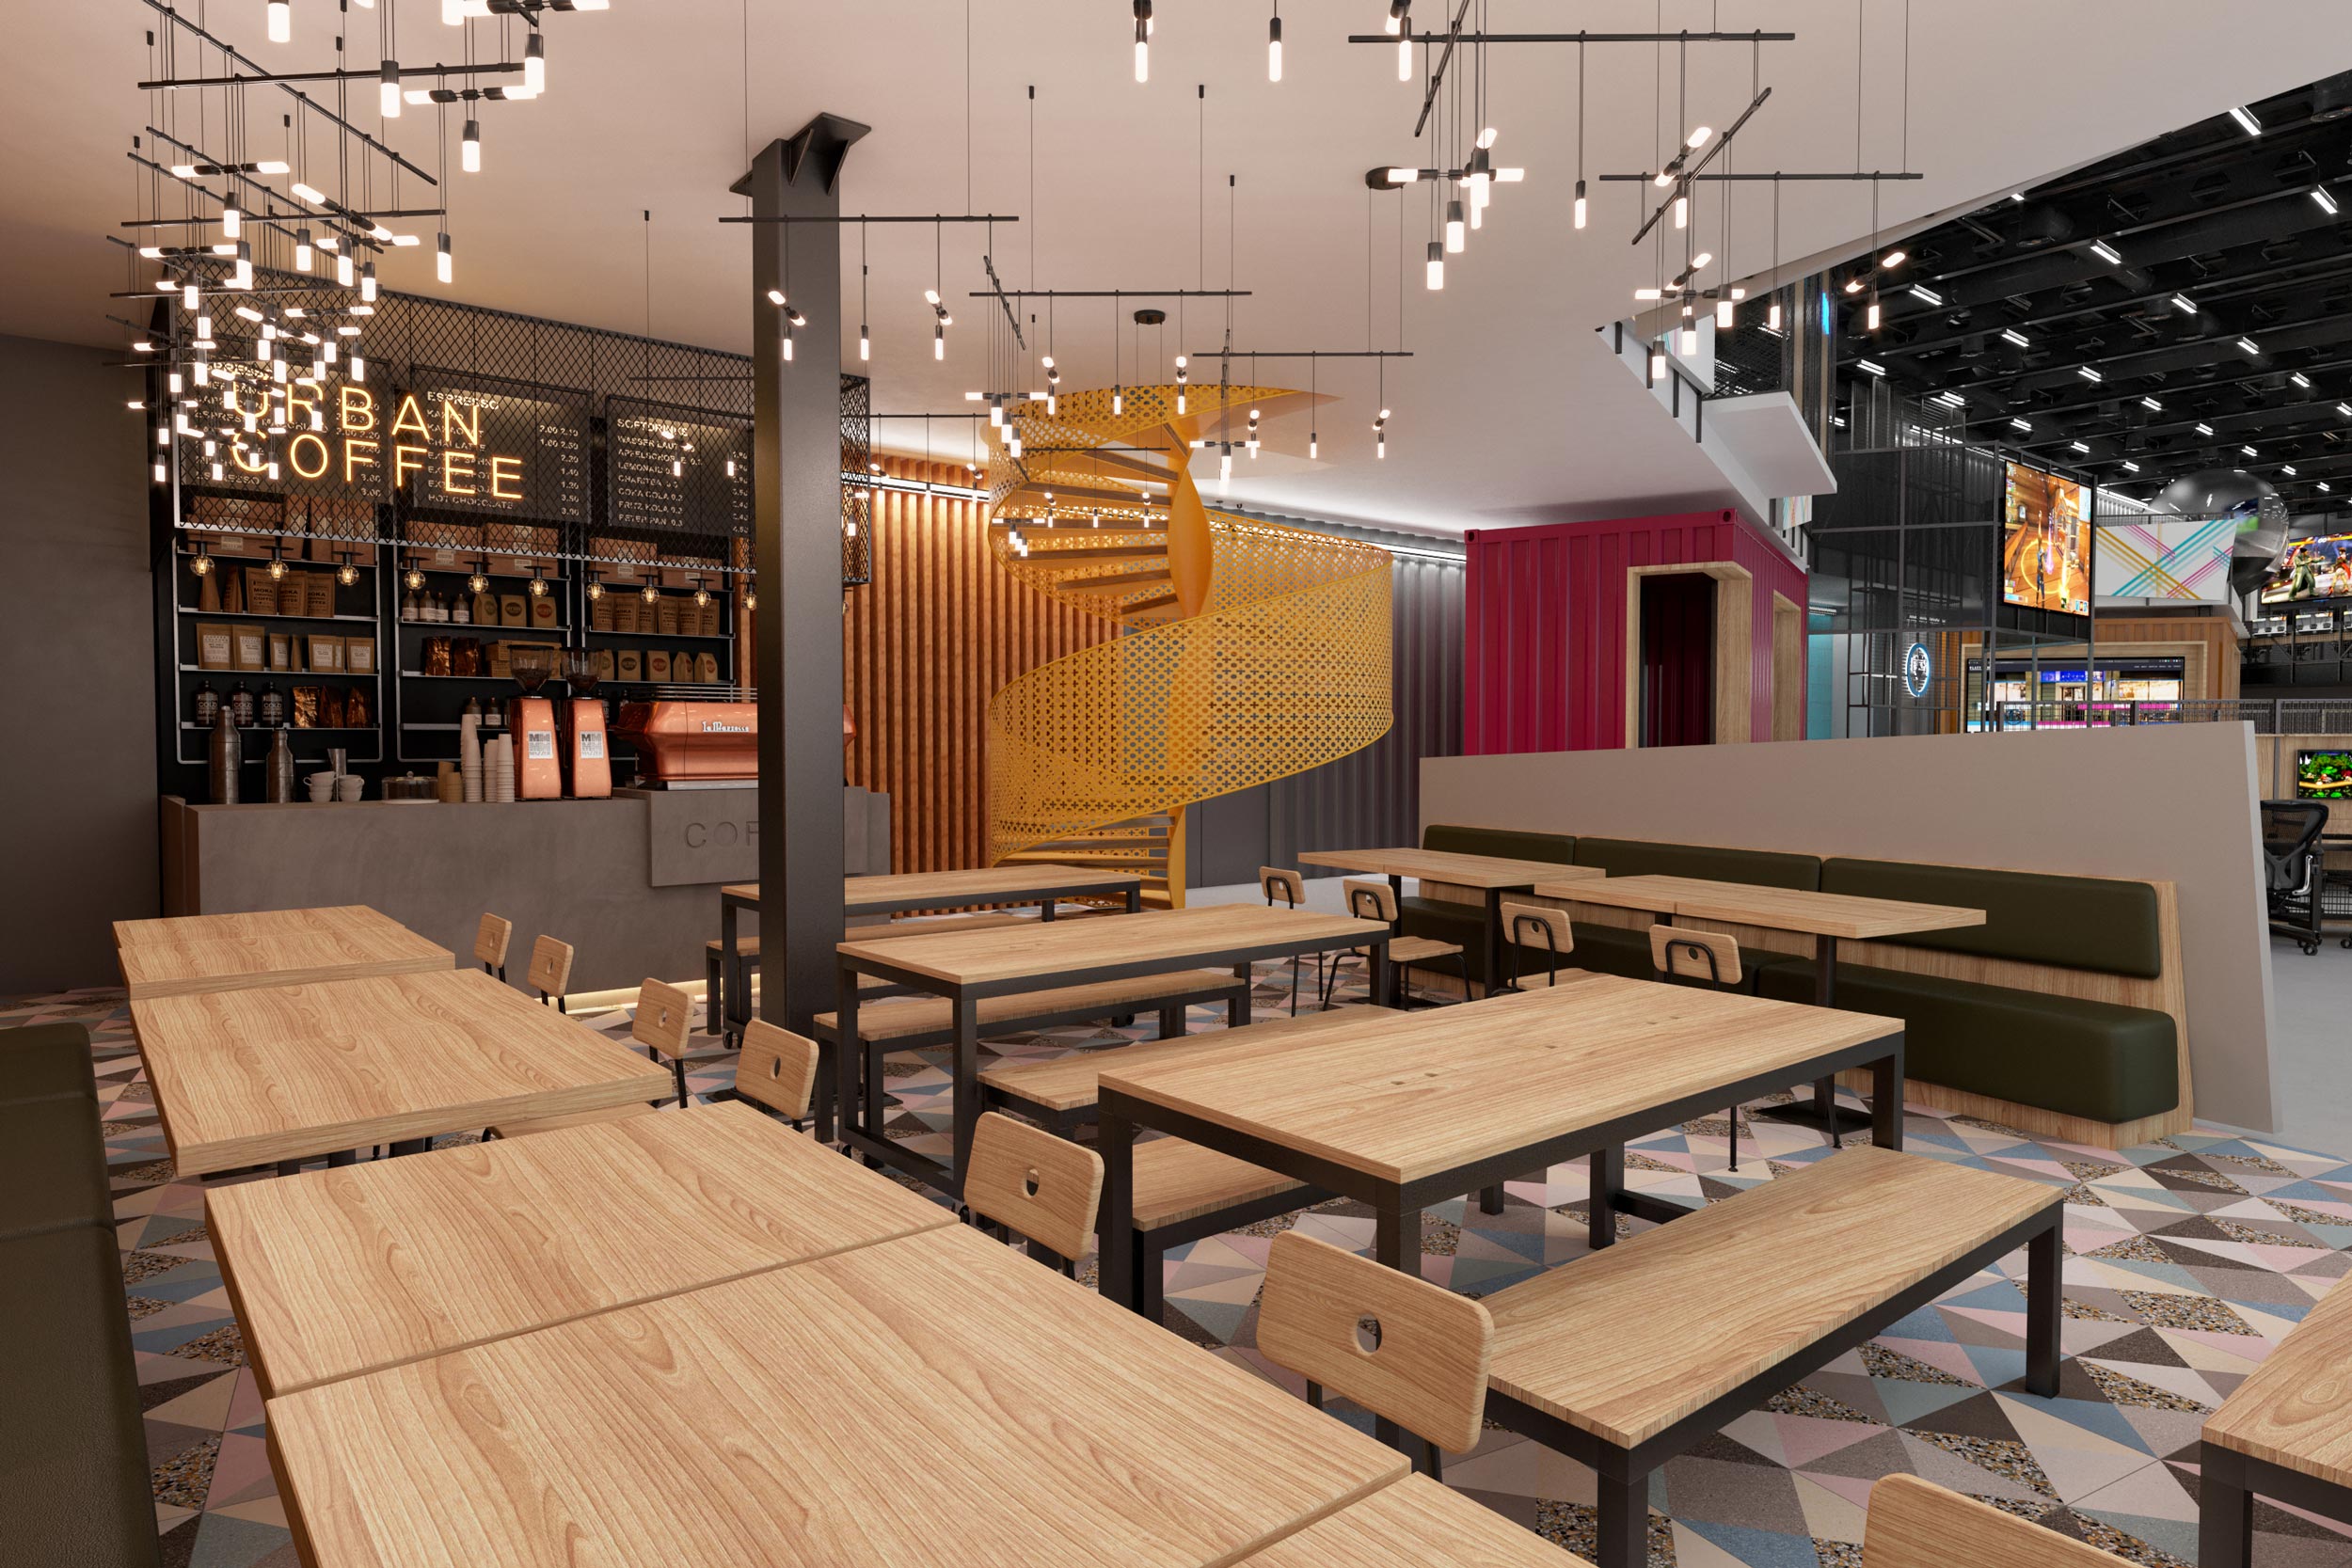 New Platform Gaming Bar, Shoreditch Commercial Retail Interior Design Visuals by Unit4 Studio, London